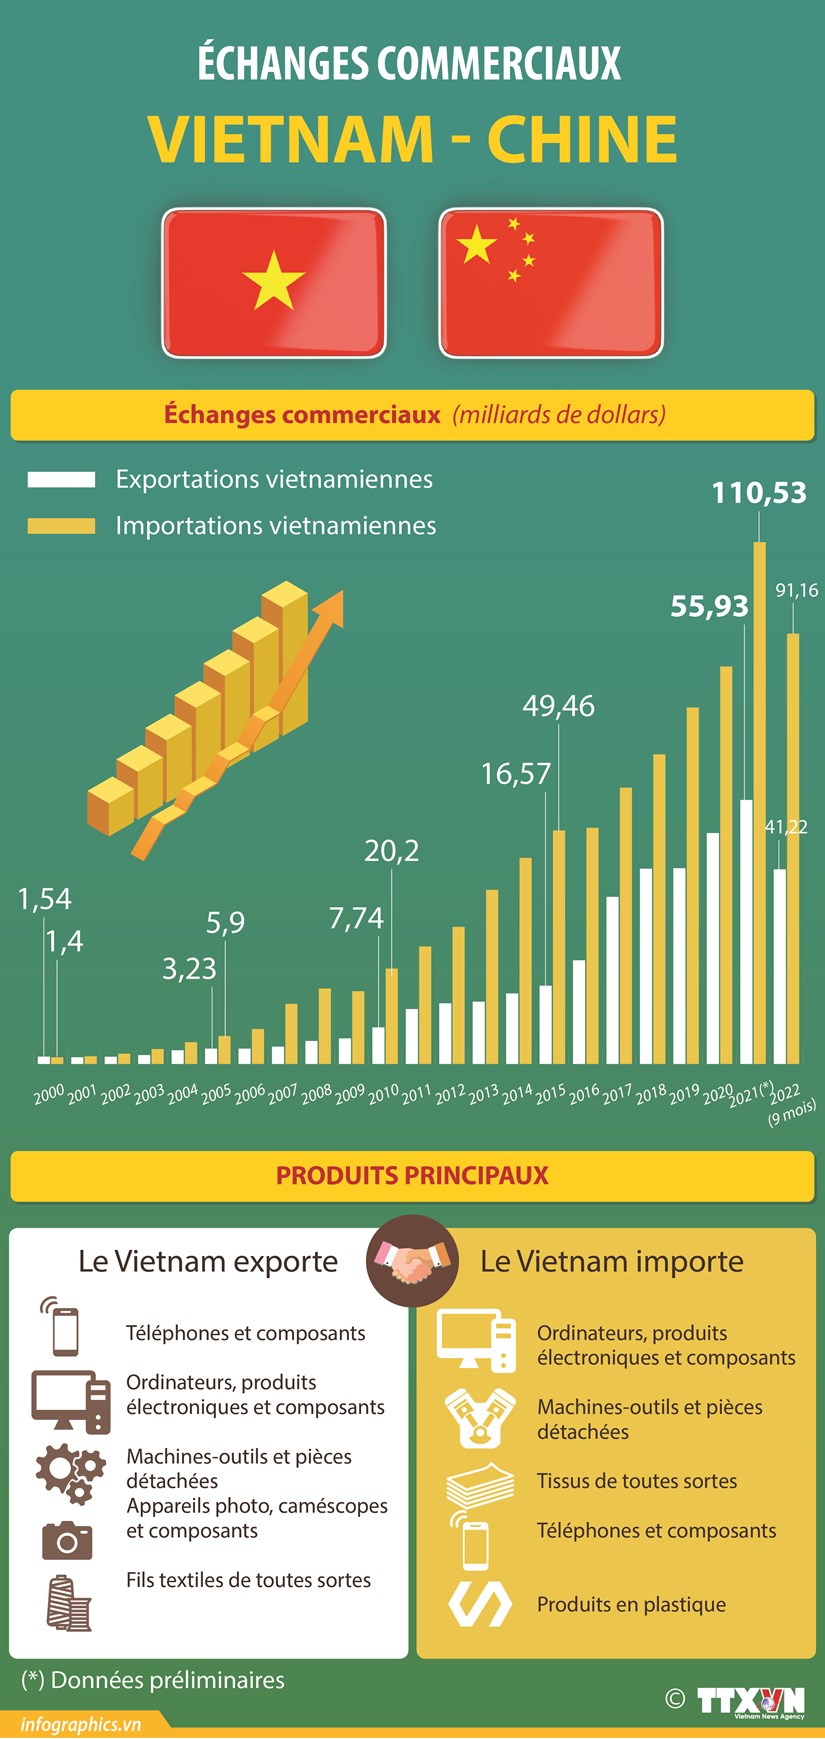 Echanges commerciaux Vietnam-Chine hinh anh 1